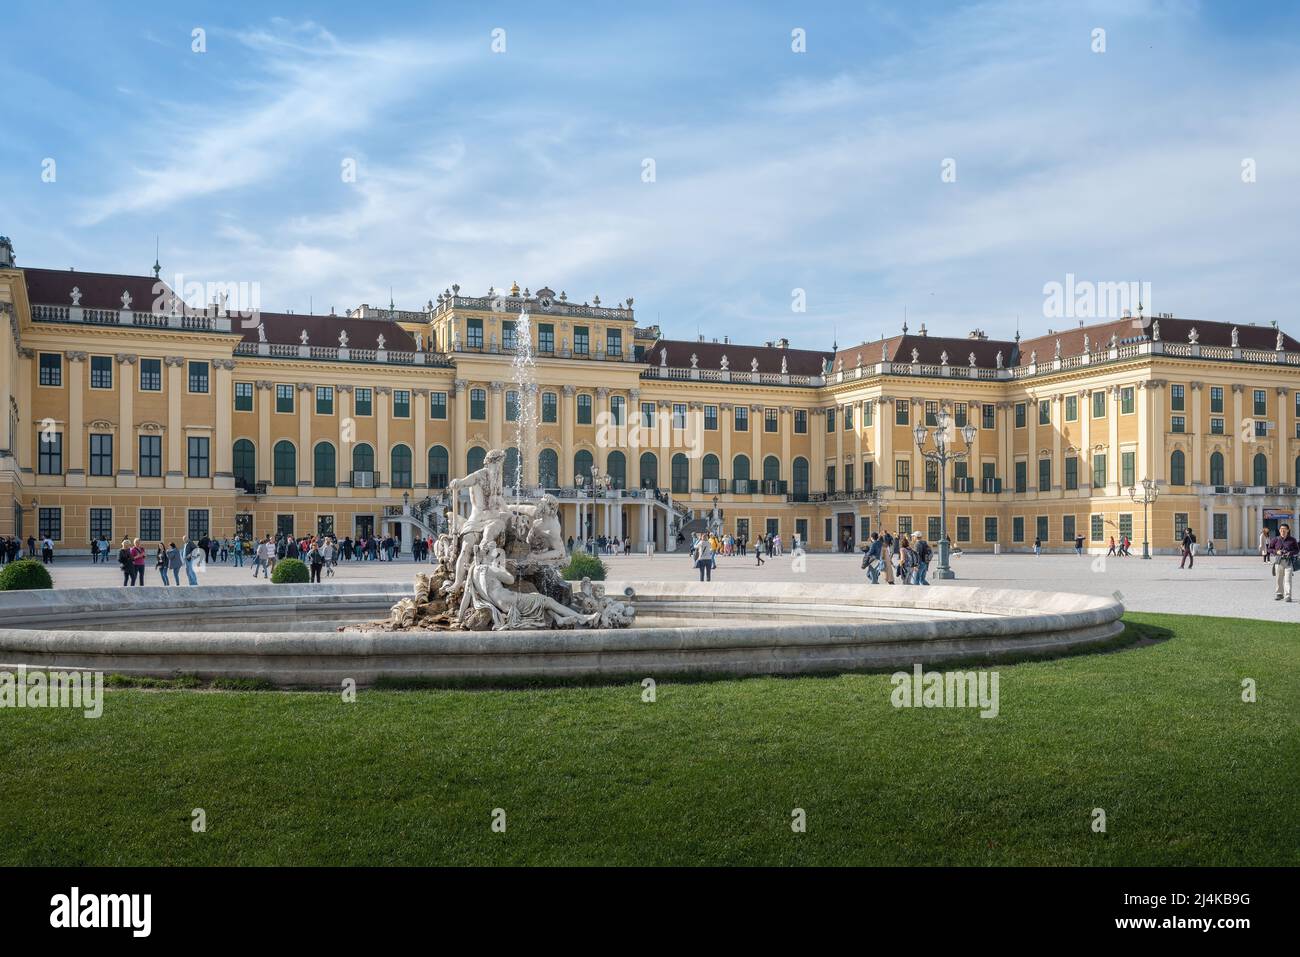 Galicia, Volhynia and Transylvania fountain at Schonbrunn Palace Forecourt - by Franz Anton von Zauner and Joseph Baptist Hagenauer - Vienna, Austria Stock Photo